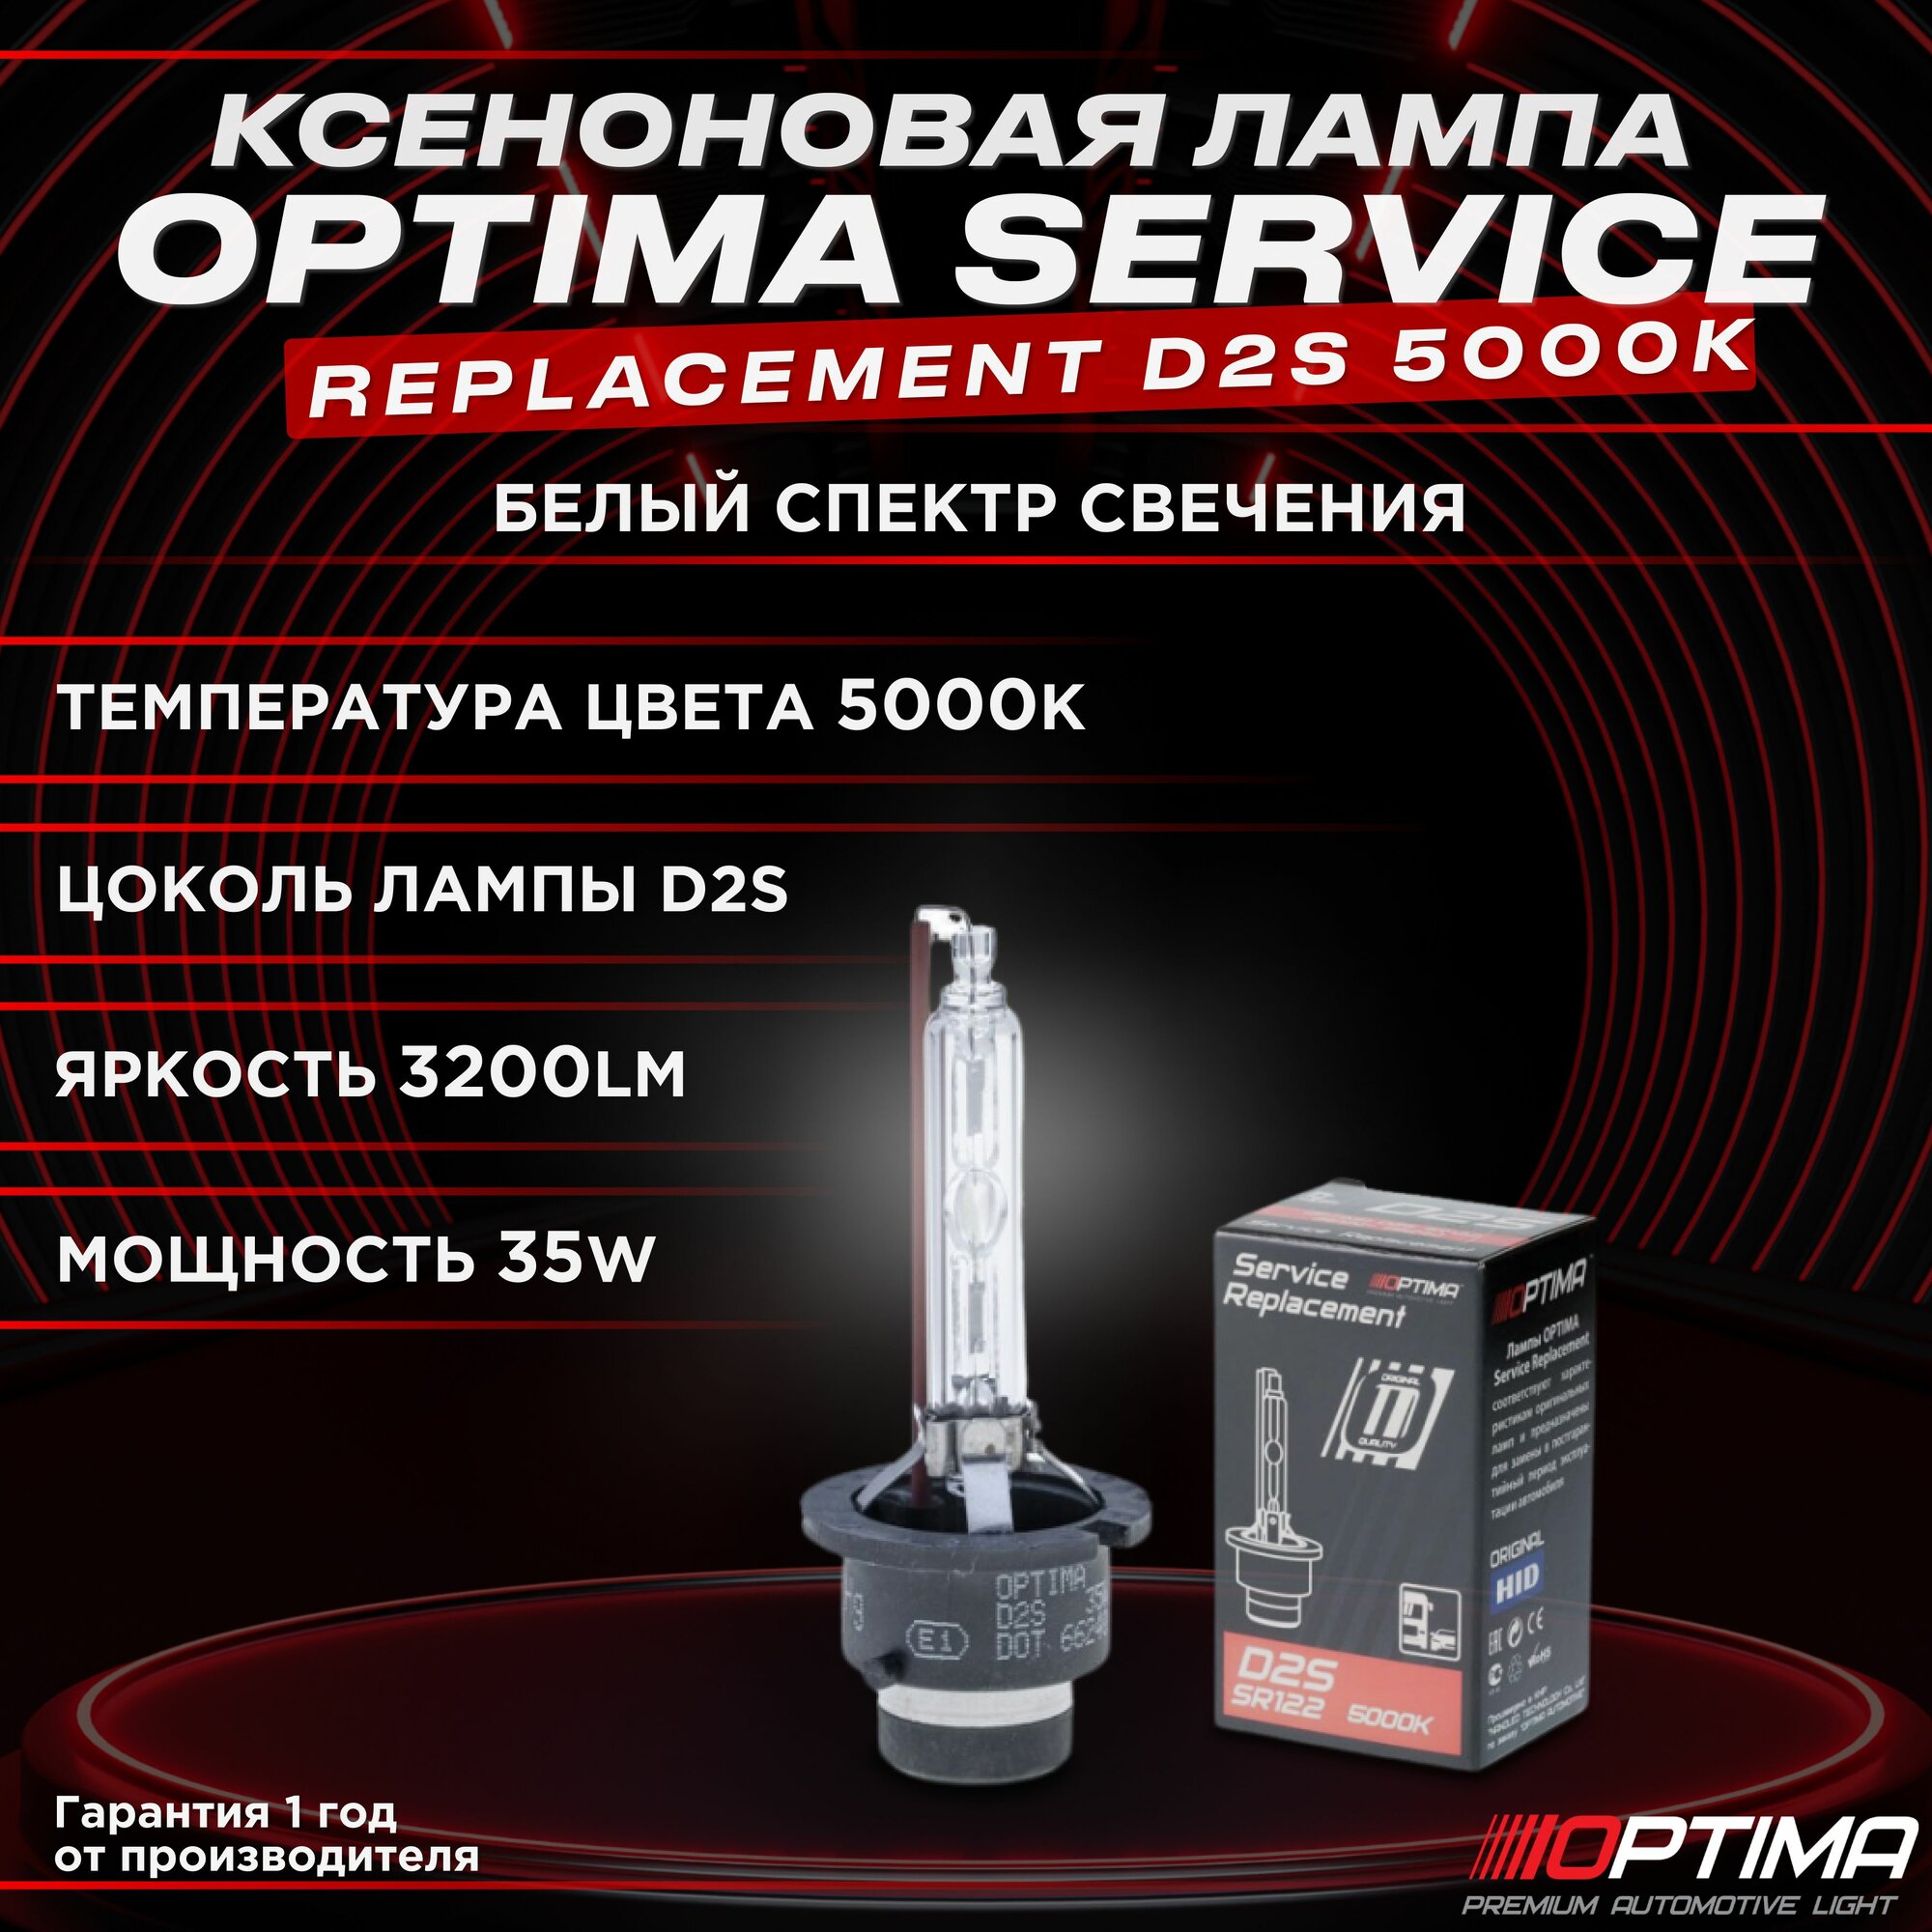 Ксеноновая лампа Optima Service Replacement D2S 5000K - 1 шт.